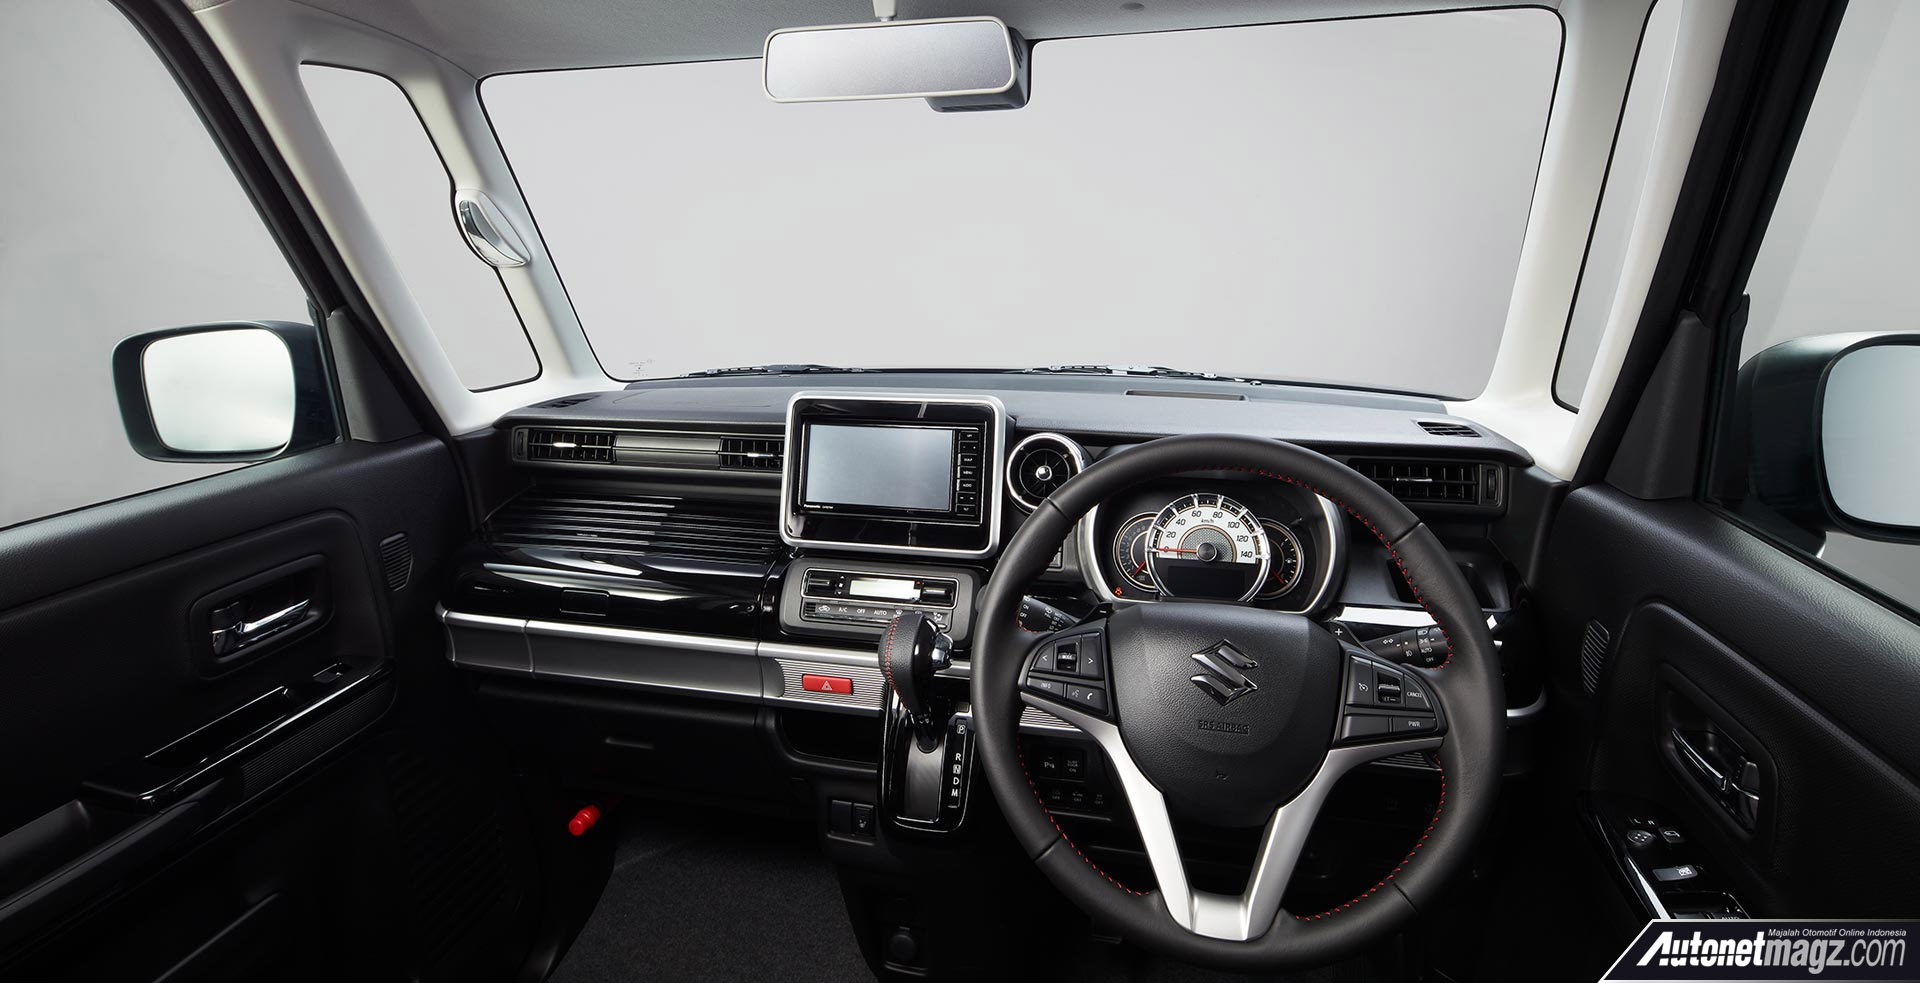 Berita, interior New Suzuki Spacia Custom: New Suzuki Spacia Custom Dirilis di Jepang, Kei Car Cakep